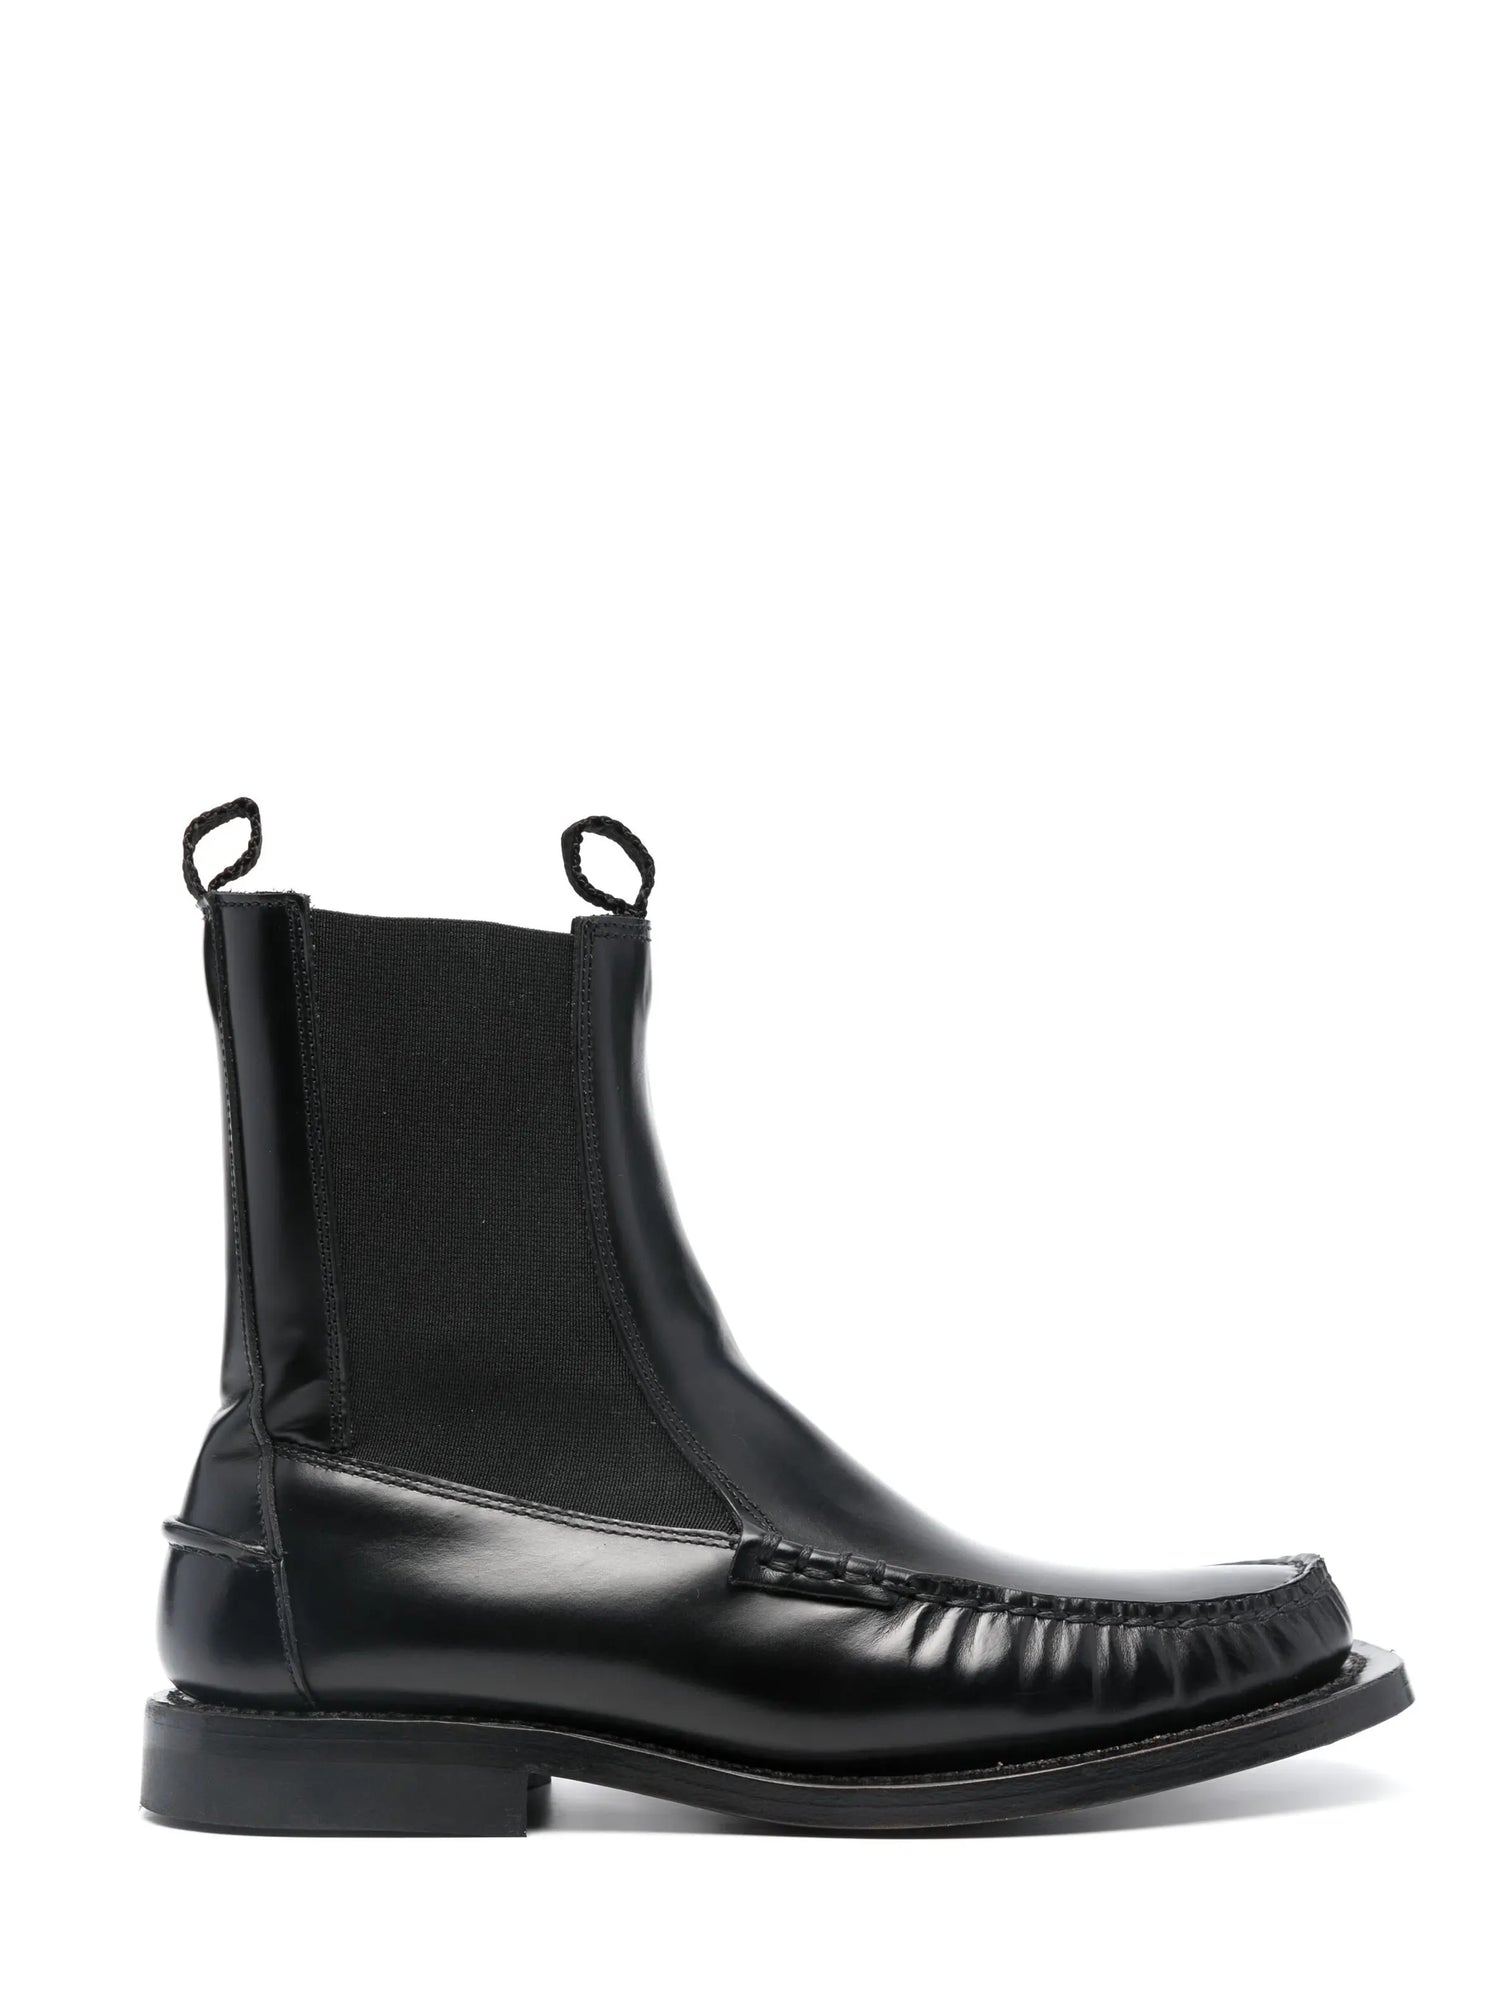 Alda Sport boots, black